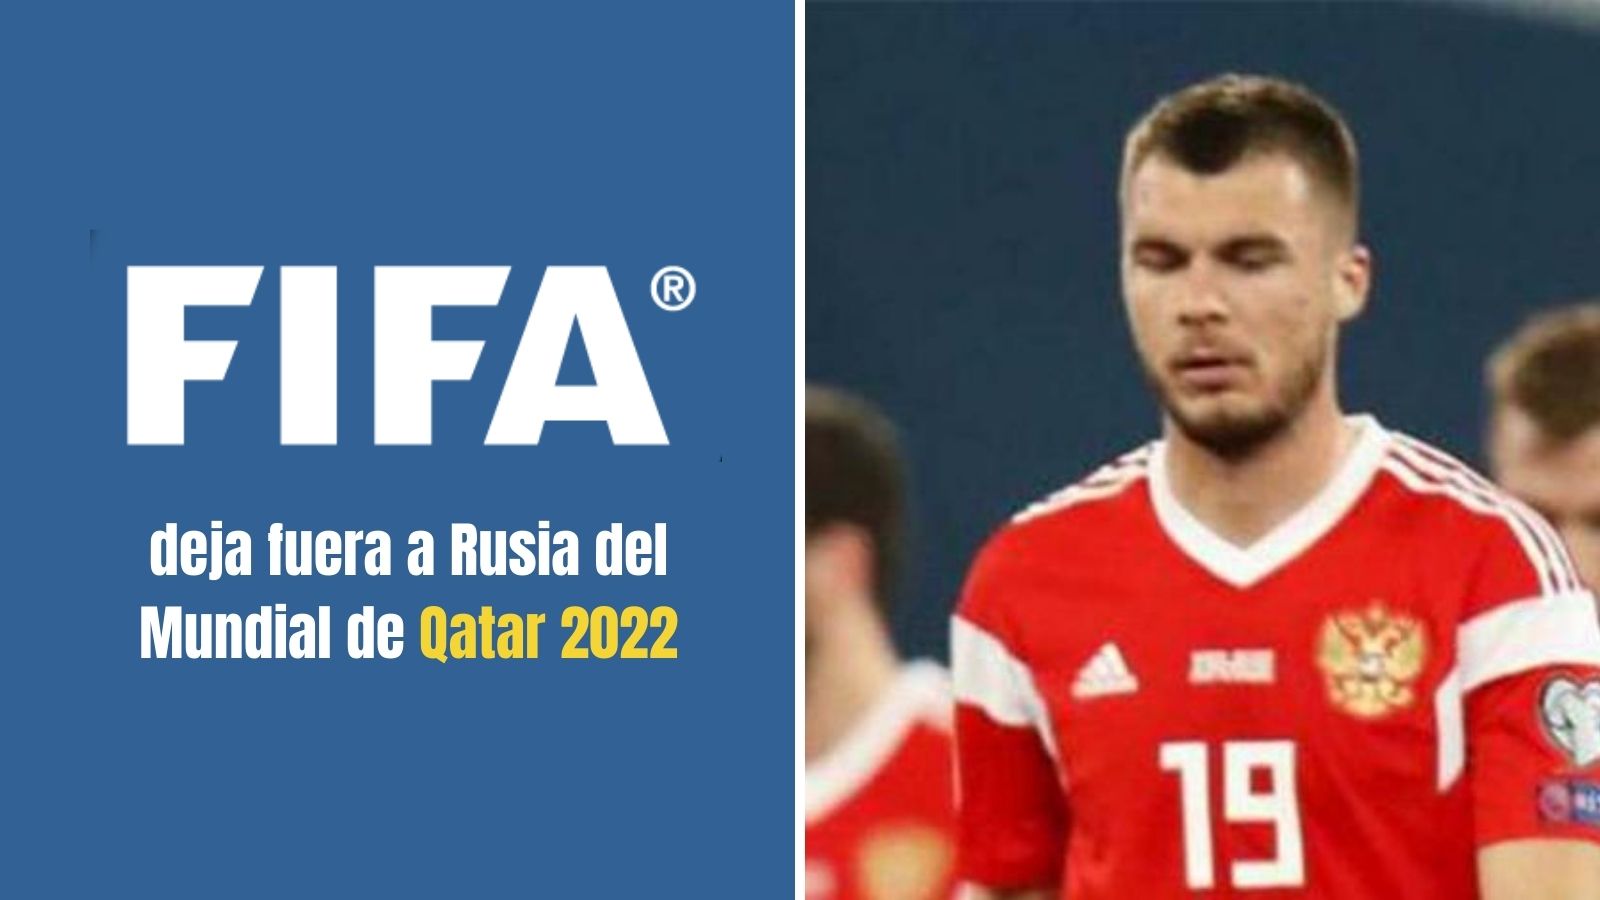 FIFA y UEFA dejan fuera a Rusia del Mundial de Quatar 2022